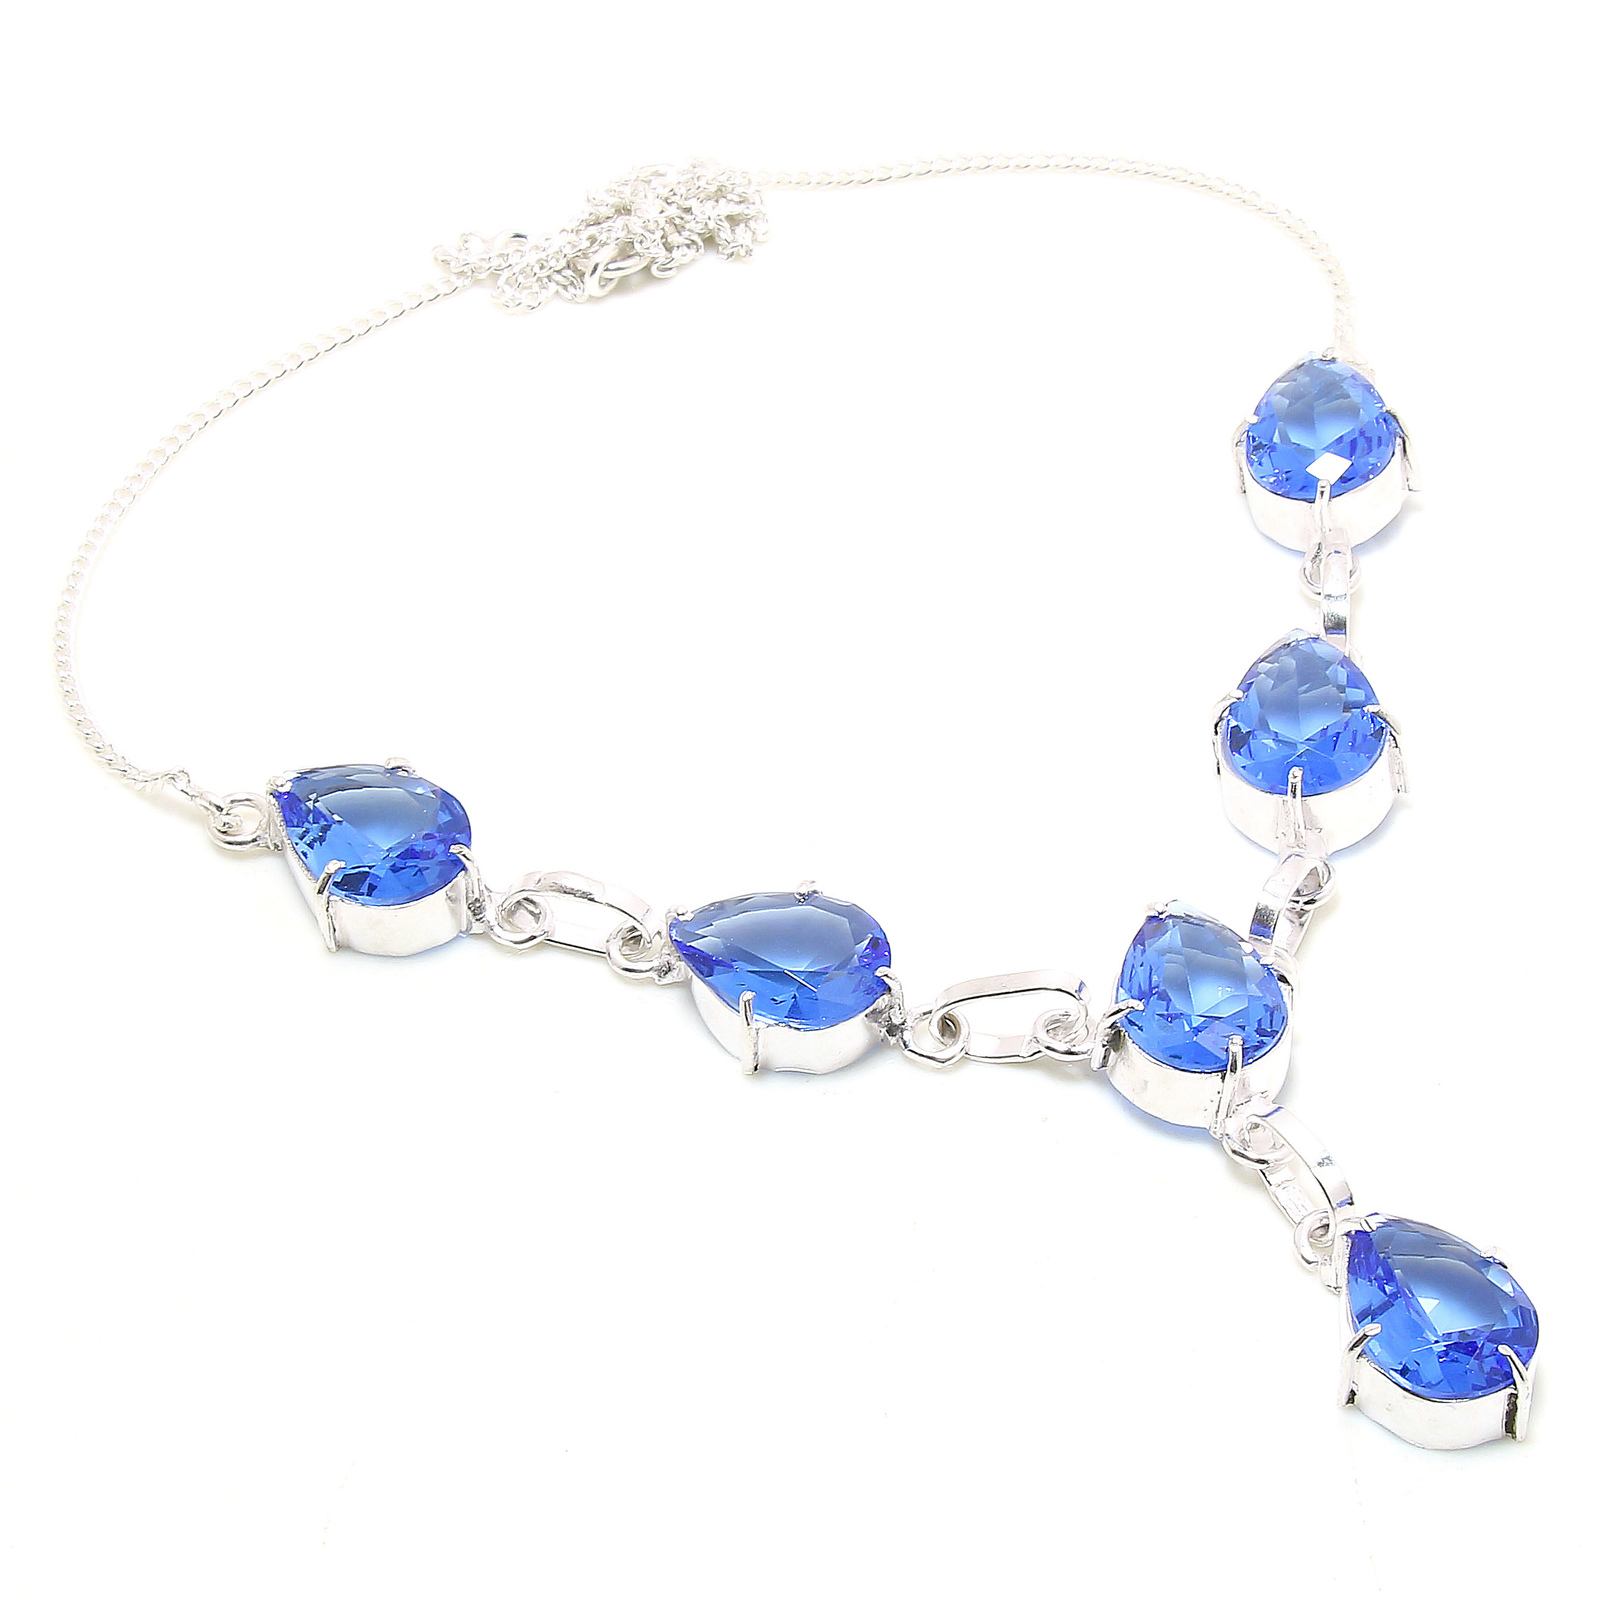 Tanzanite Quartz Pear Shape Cut Gemstone Handmade Necklace Jewelry 18" SA 1928 - $5.99